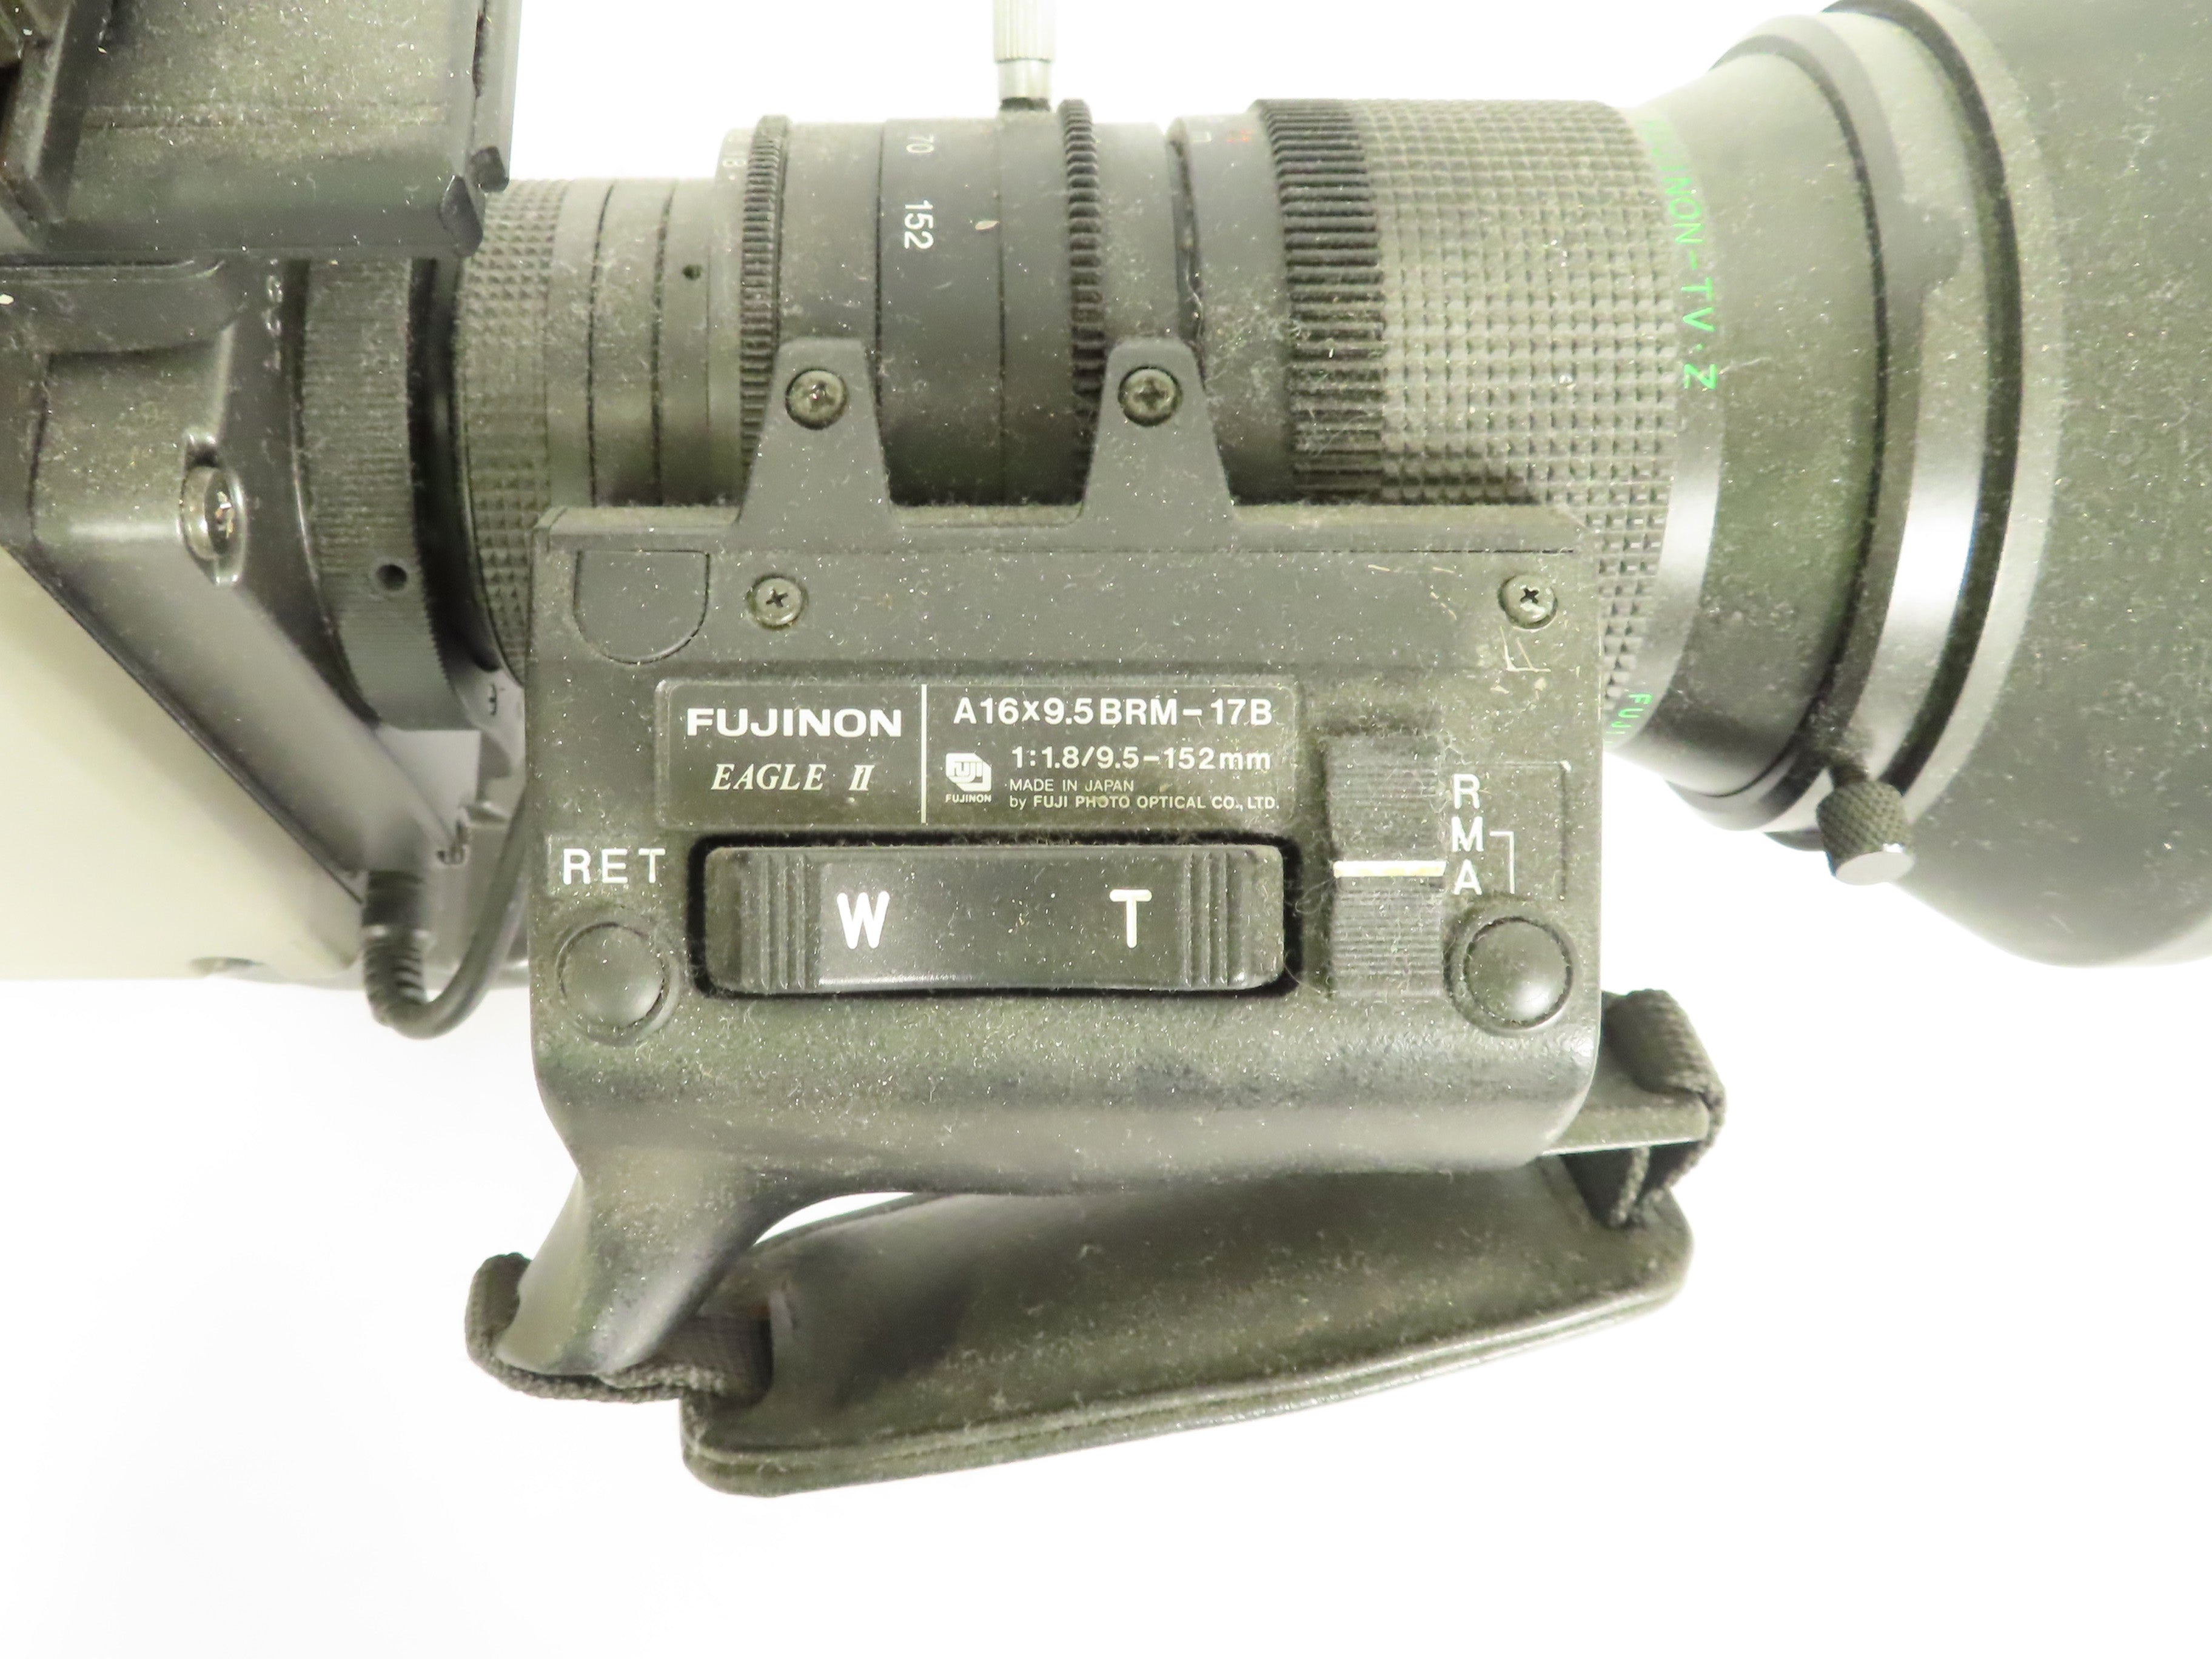 Hitachi Z-ONE-C U Color Camera with FUJINON Eagle II Lens *Missing Viewfinder*